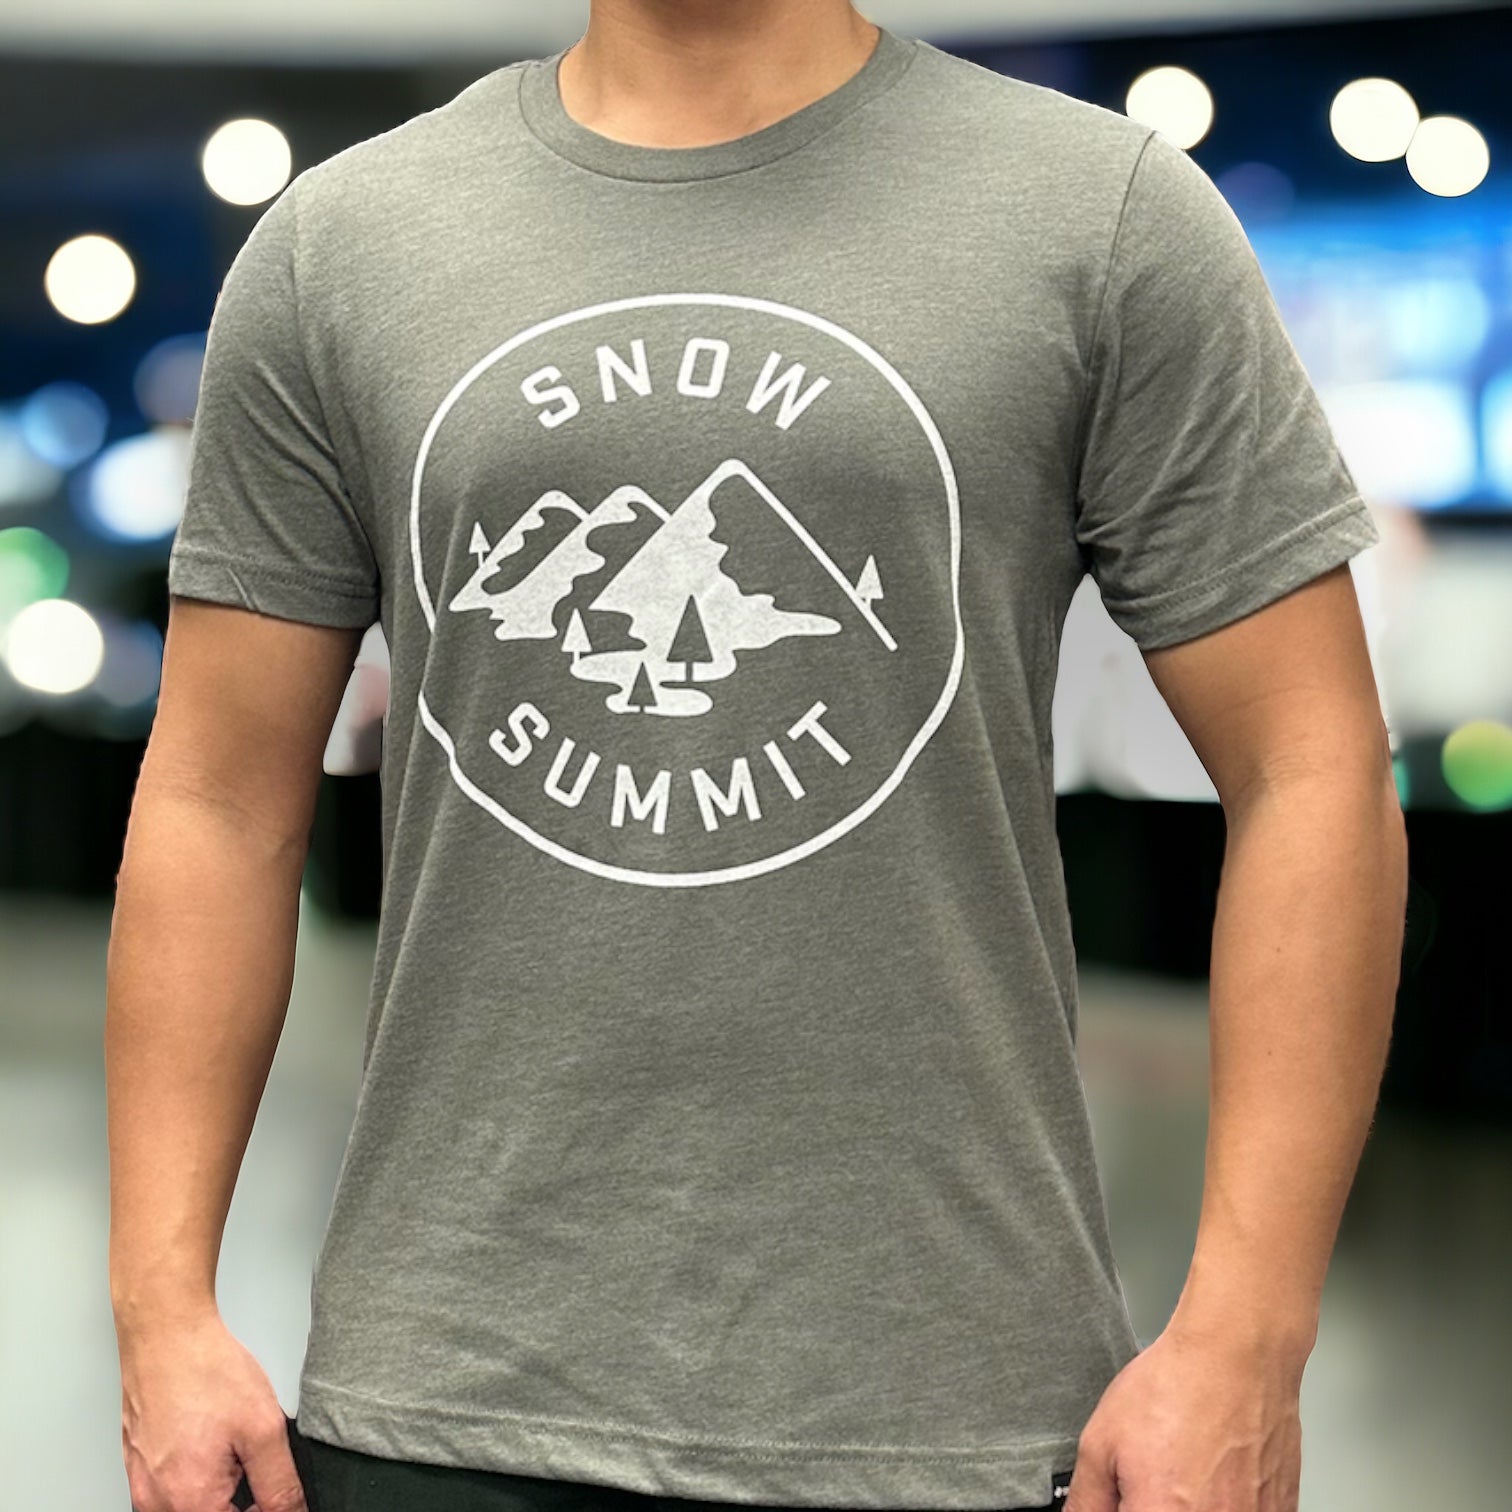 Snow Summit alpine army tee with mountains and tree circular logo